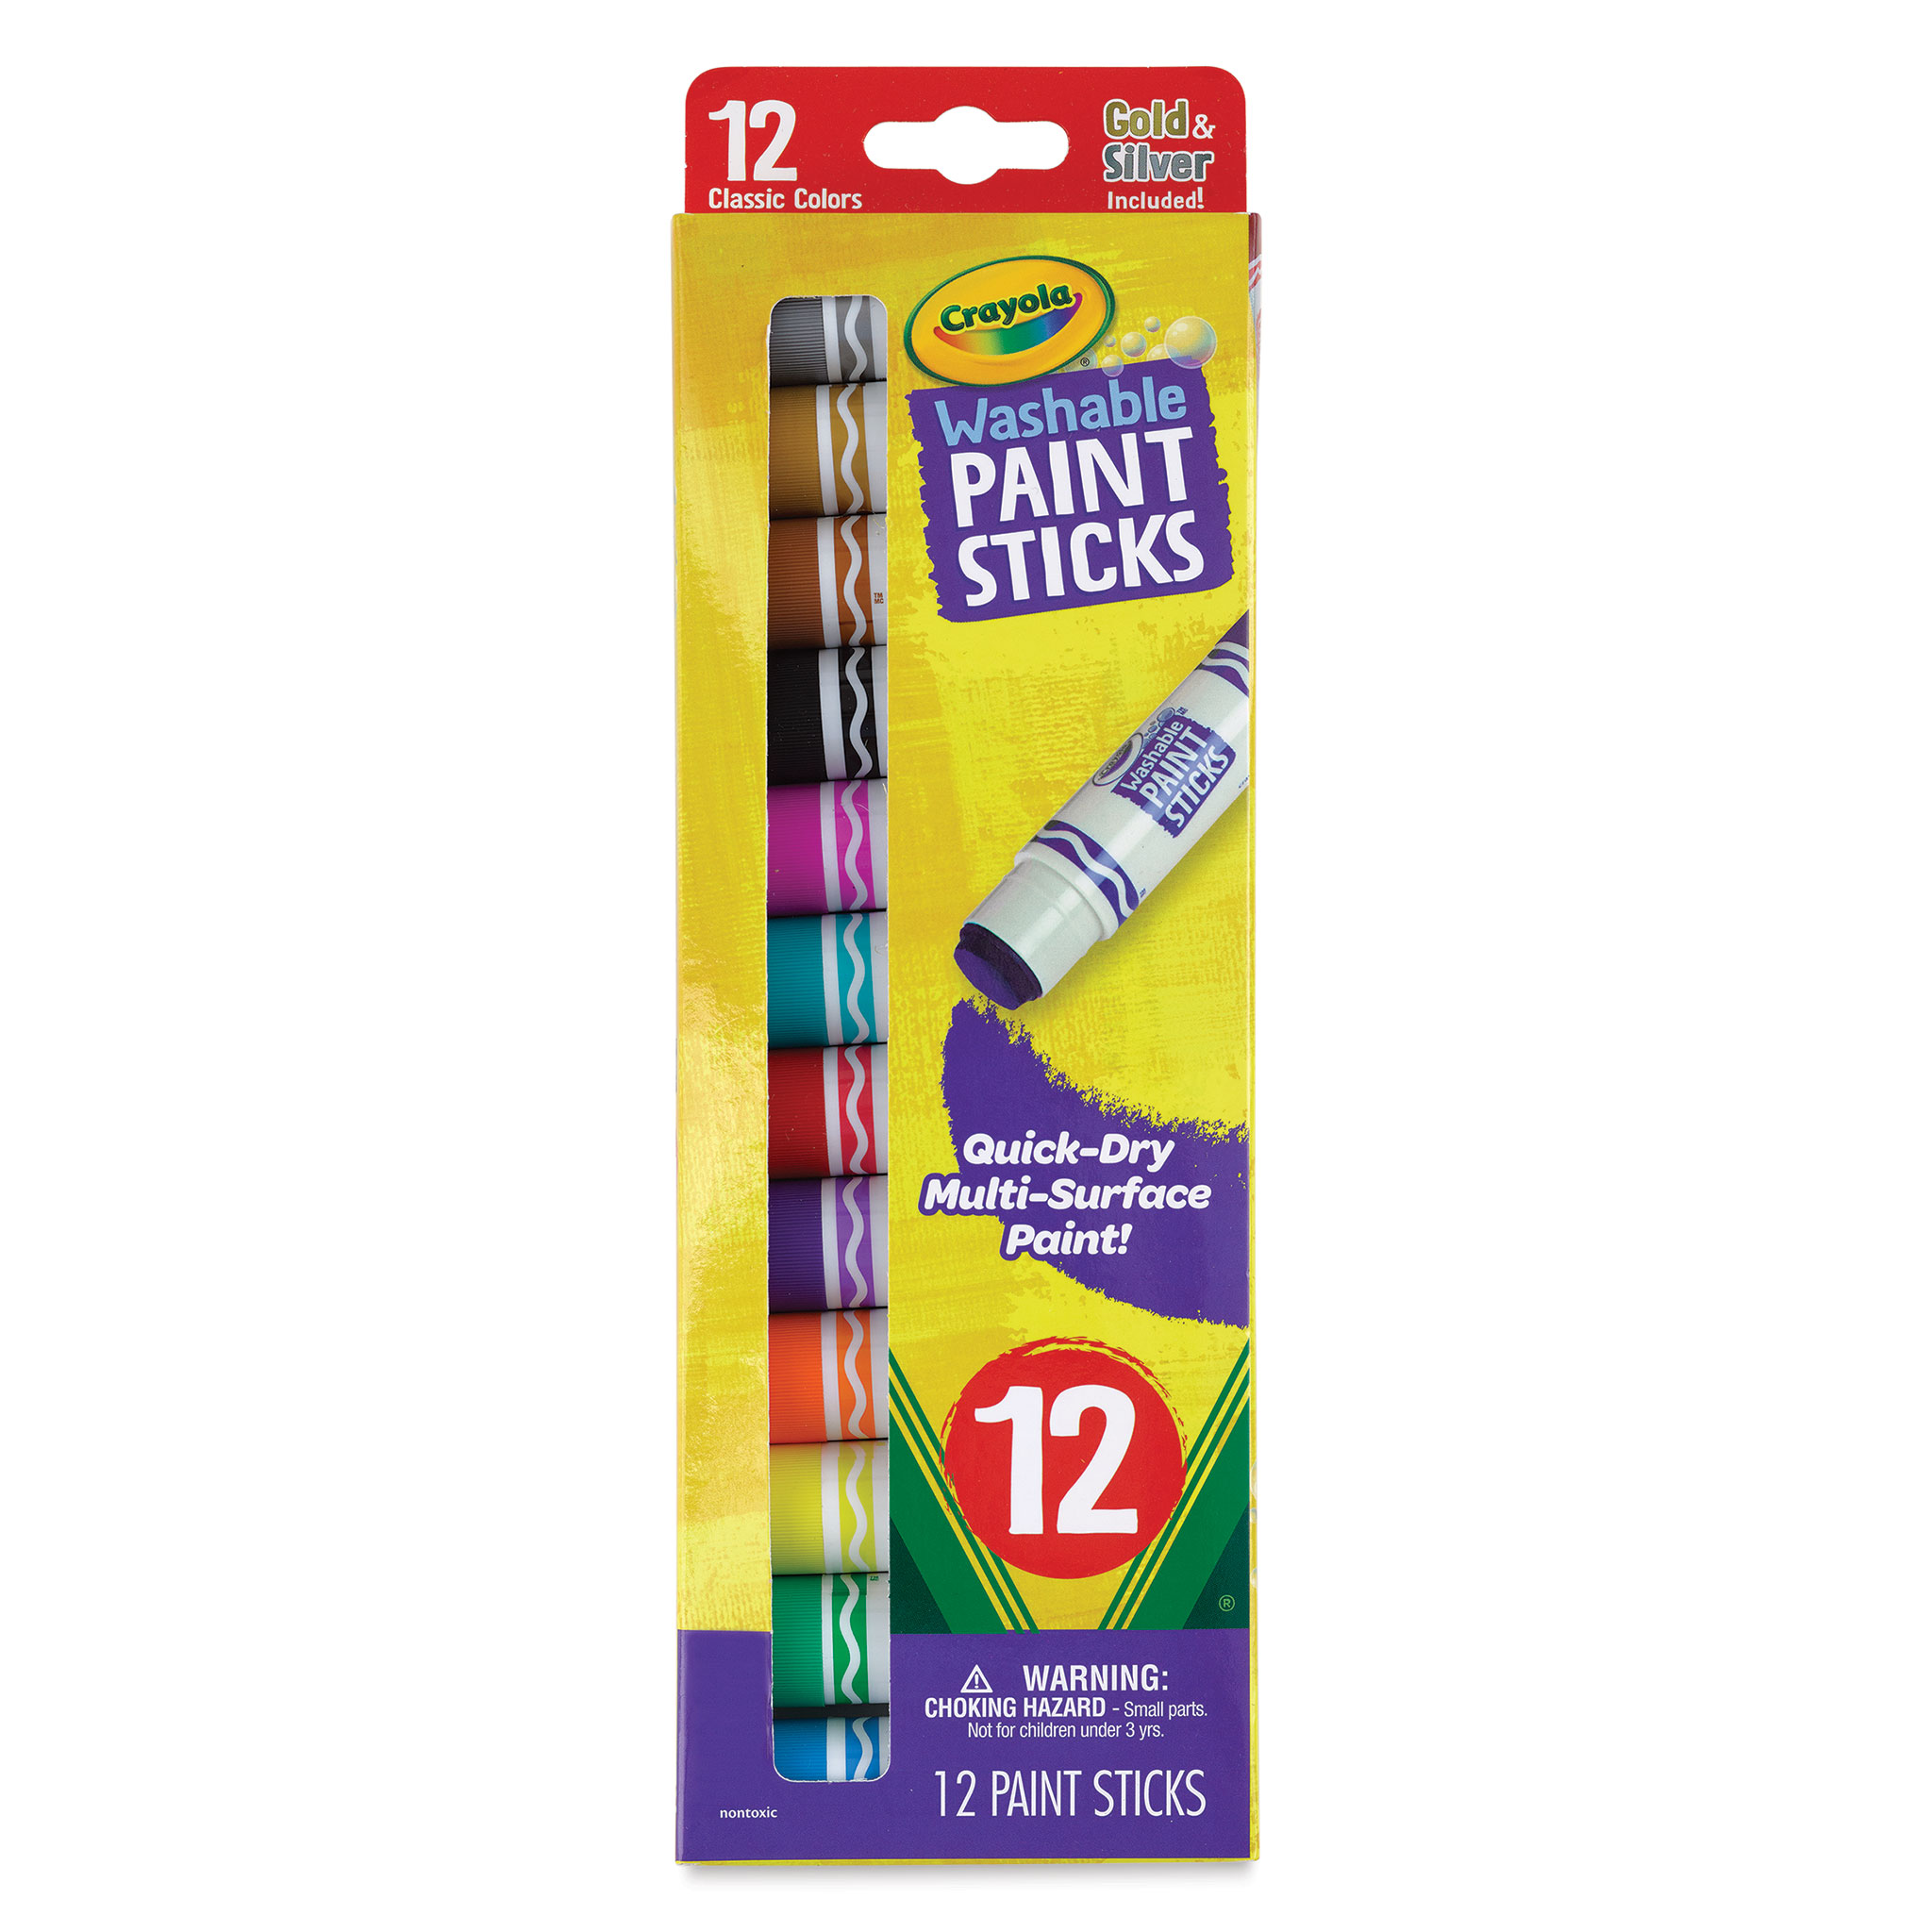 Crayola Washable Project Paint, Classic Colors, 2 oz., 6 Bottles Per Pack,  6 Packs